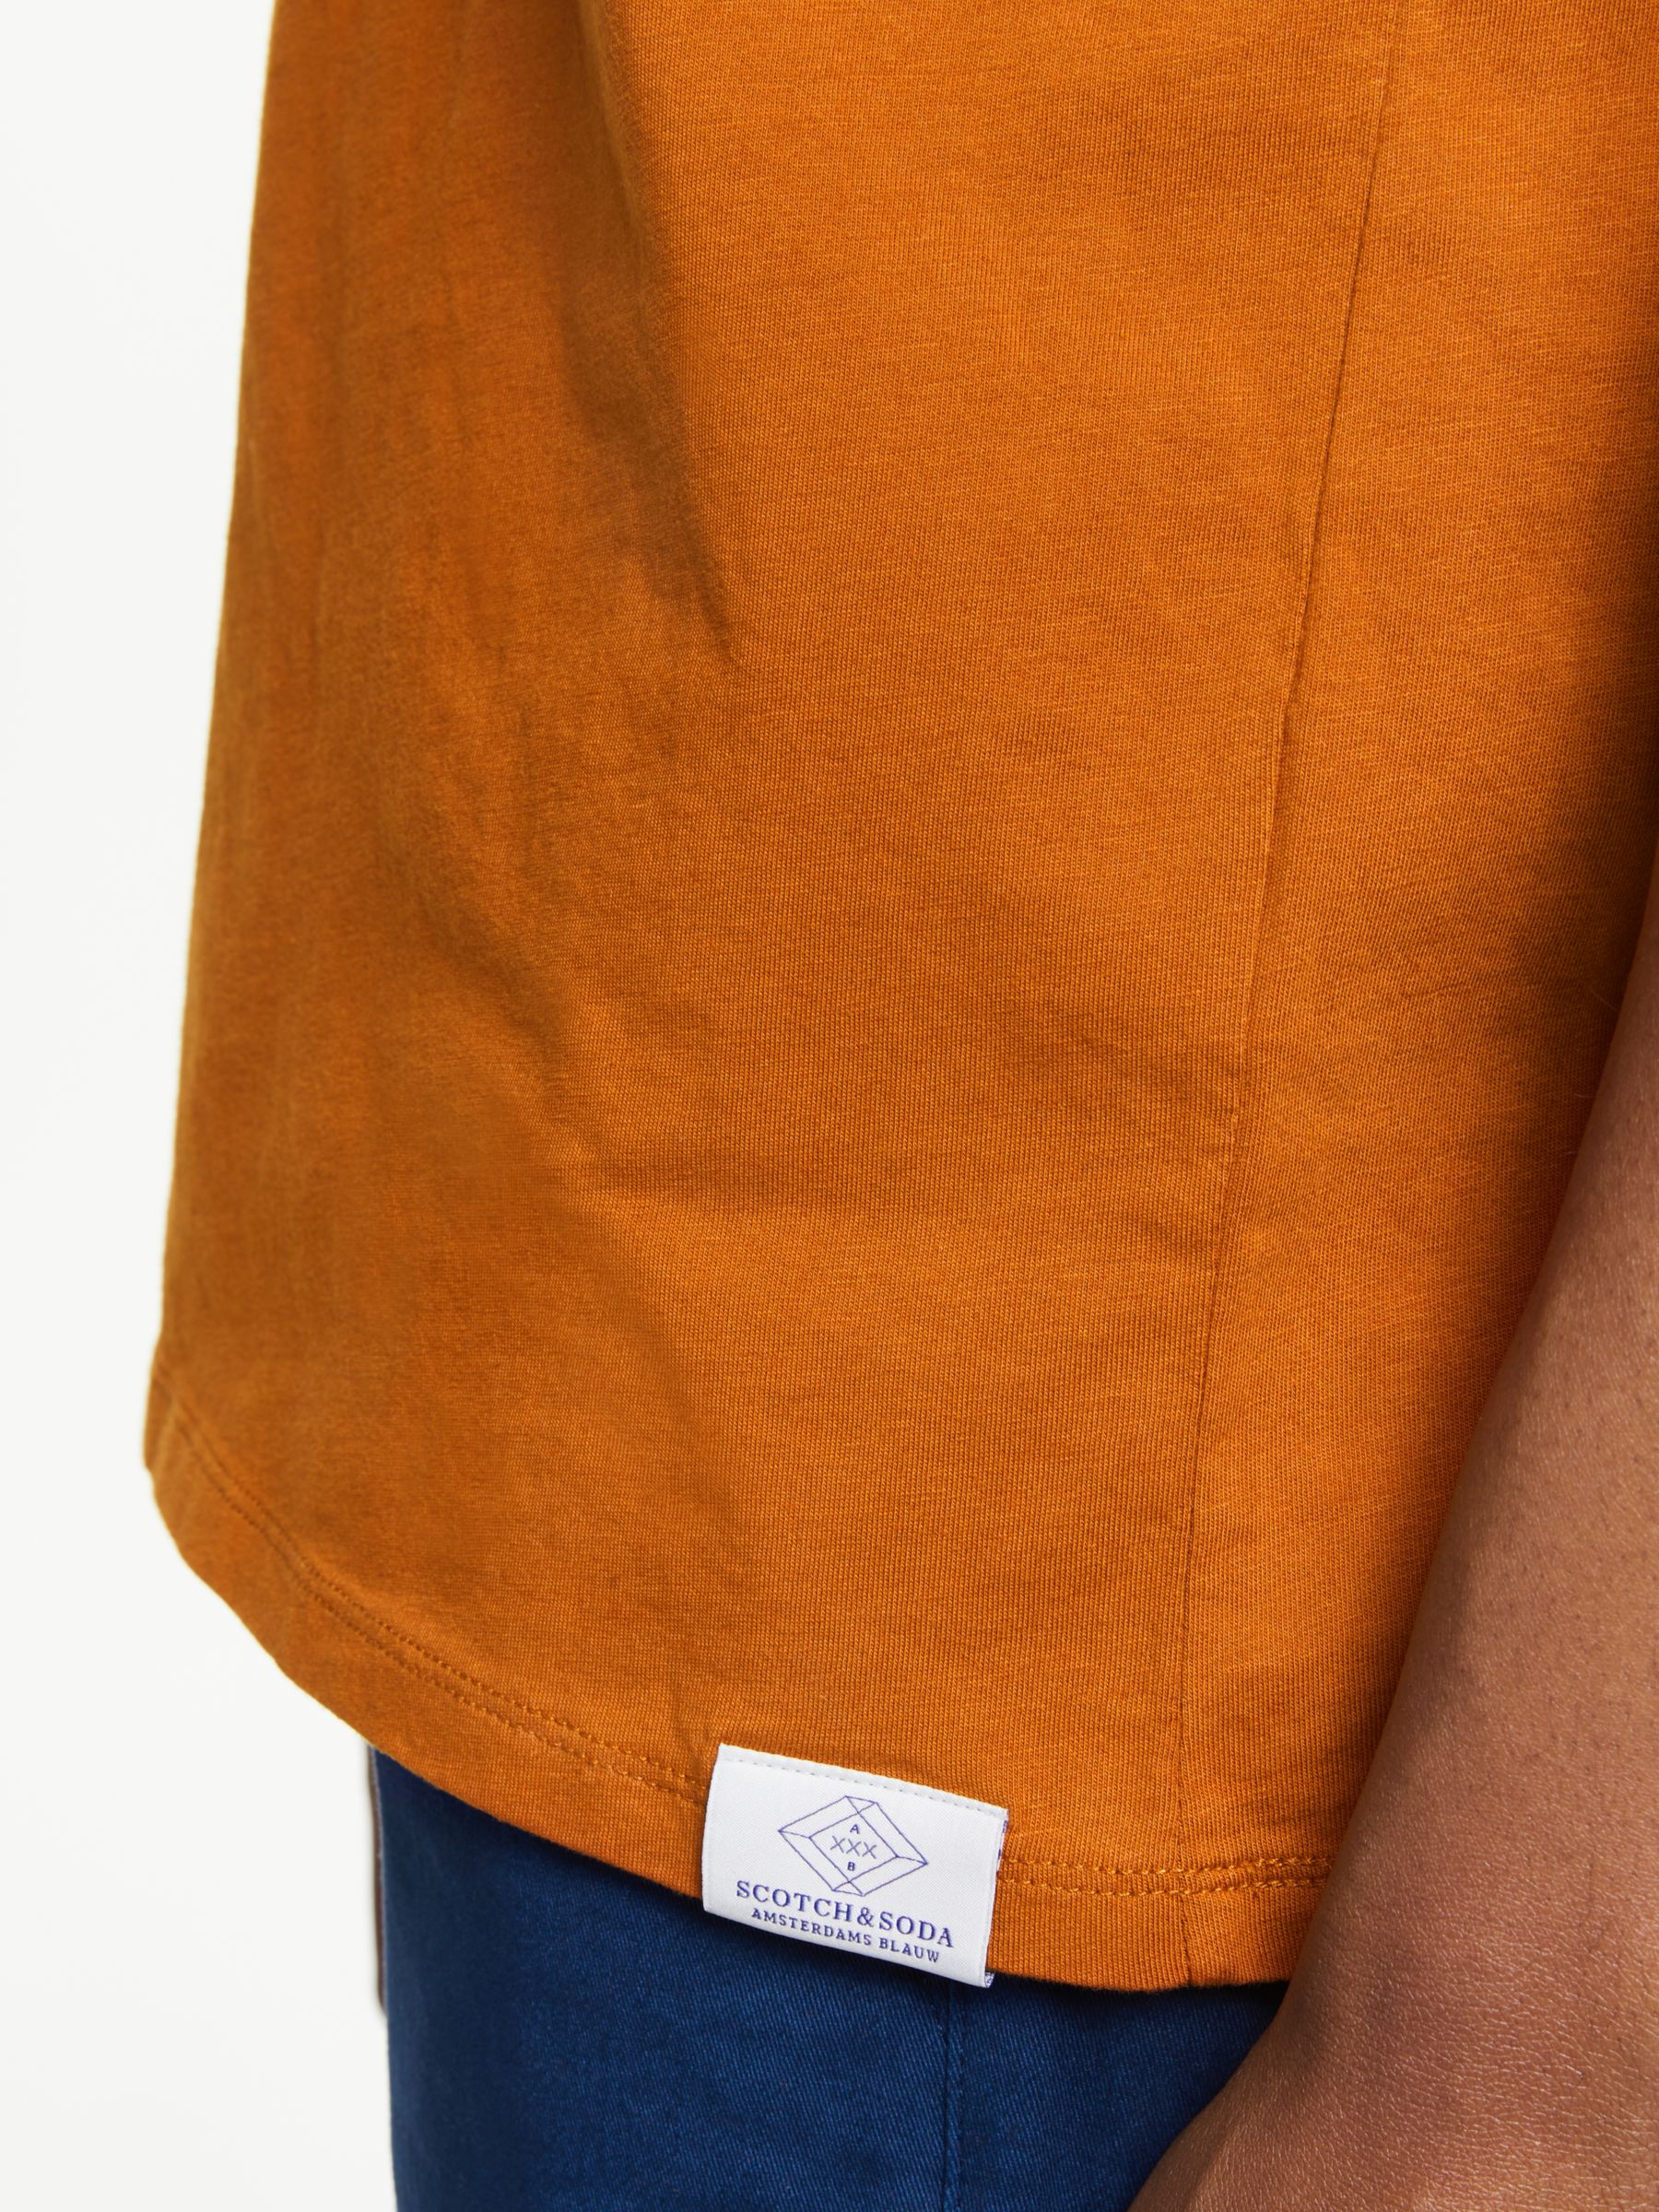 Scotch & Soda Classic Cotton Crew Neck T-Shirt, Burned Orange